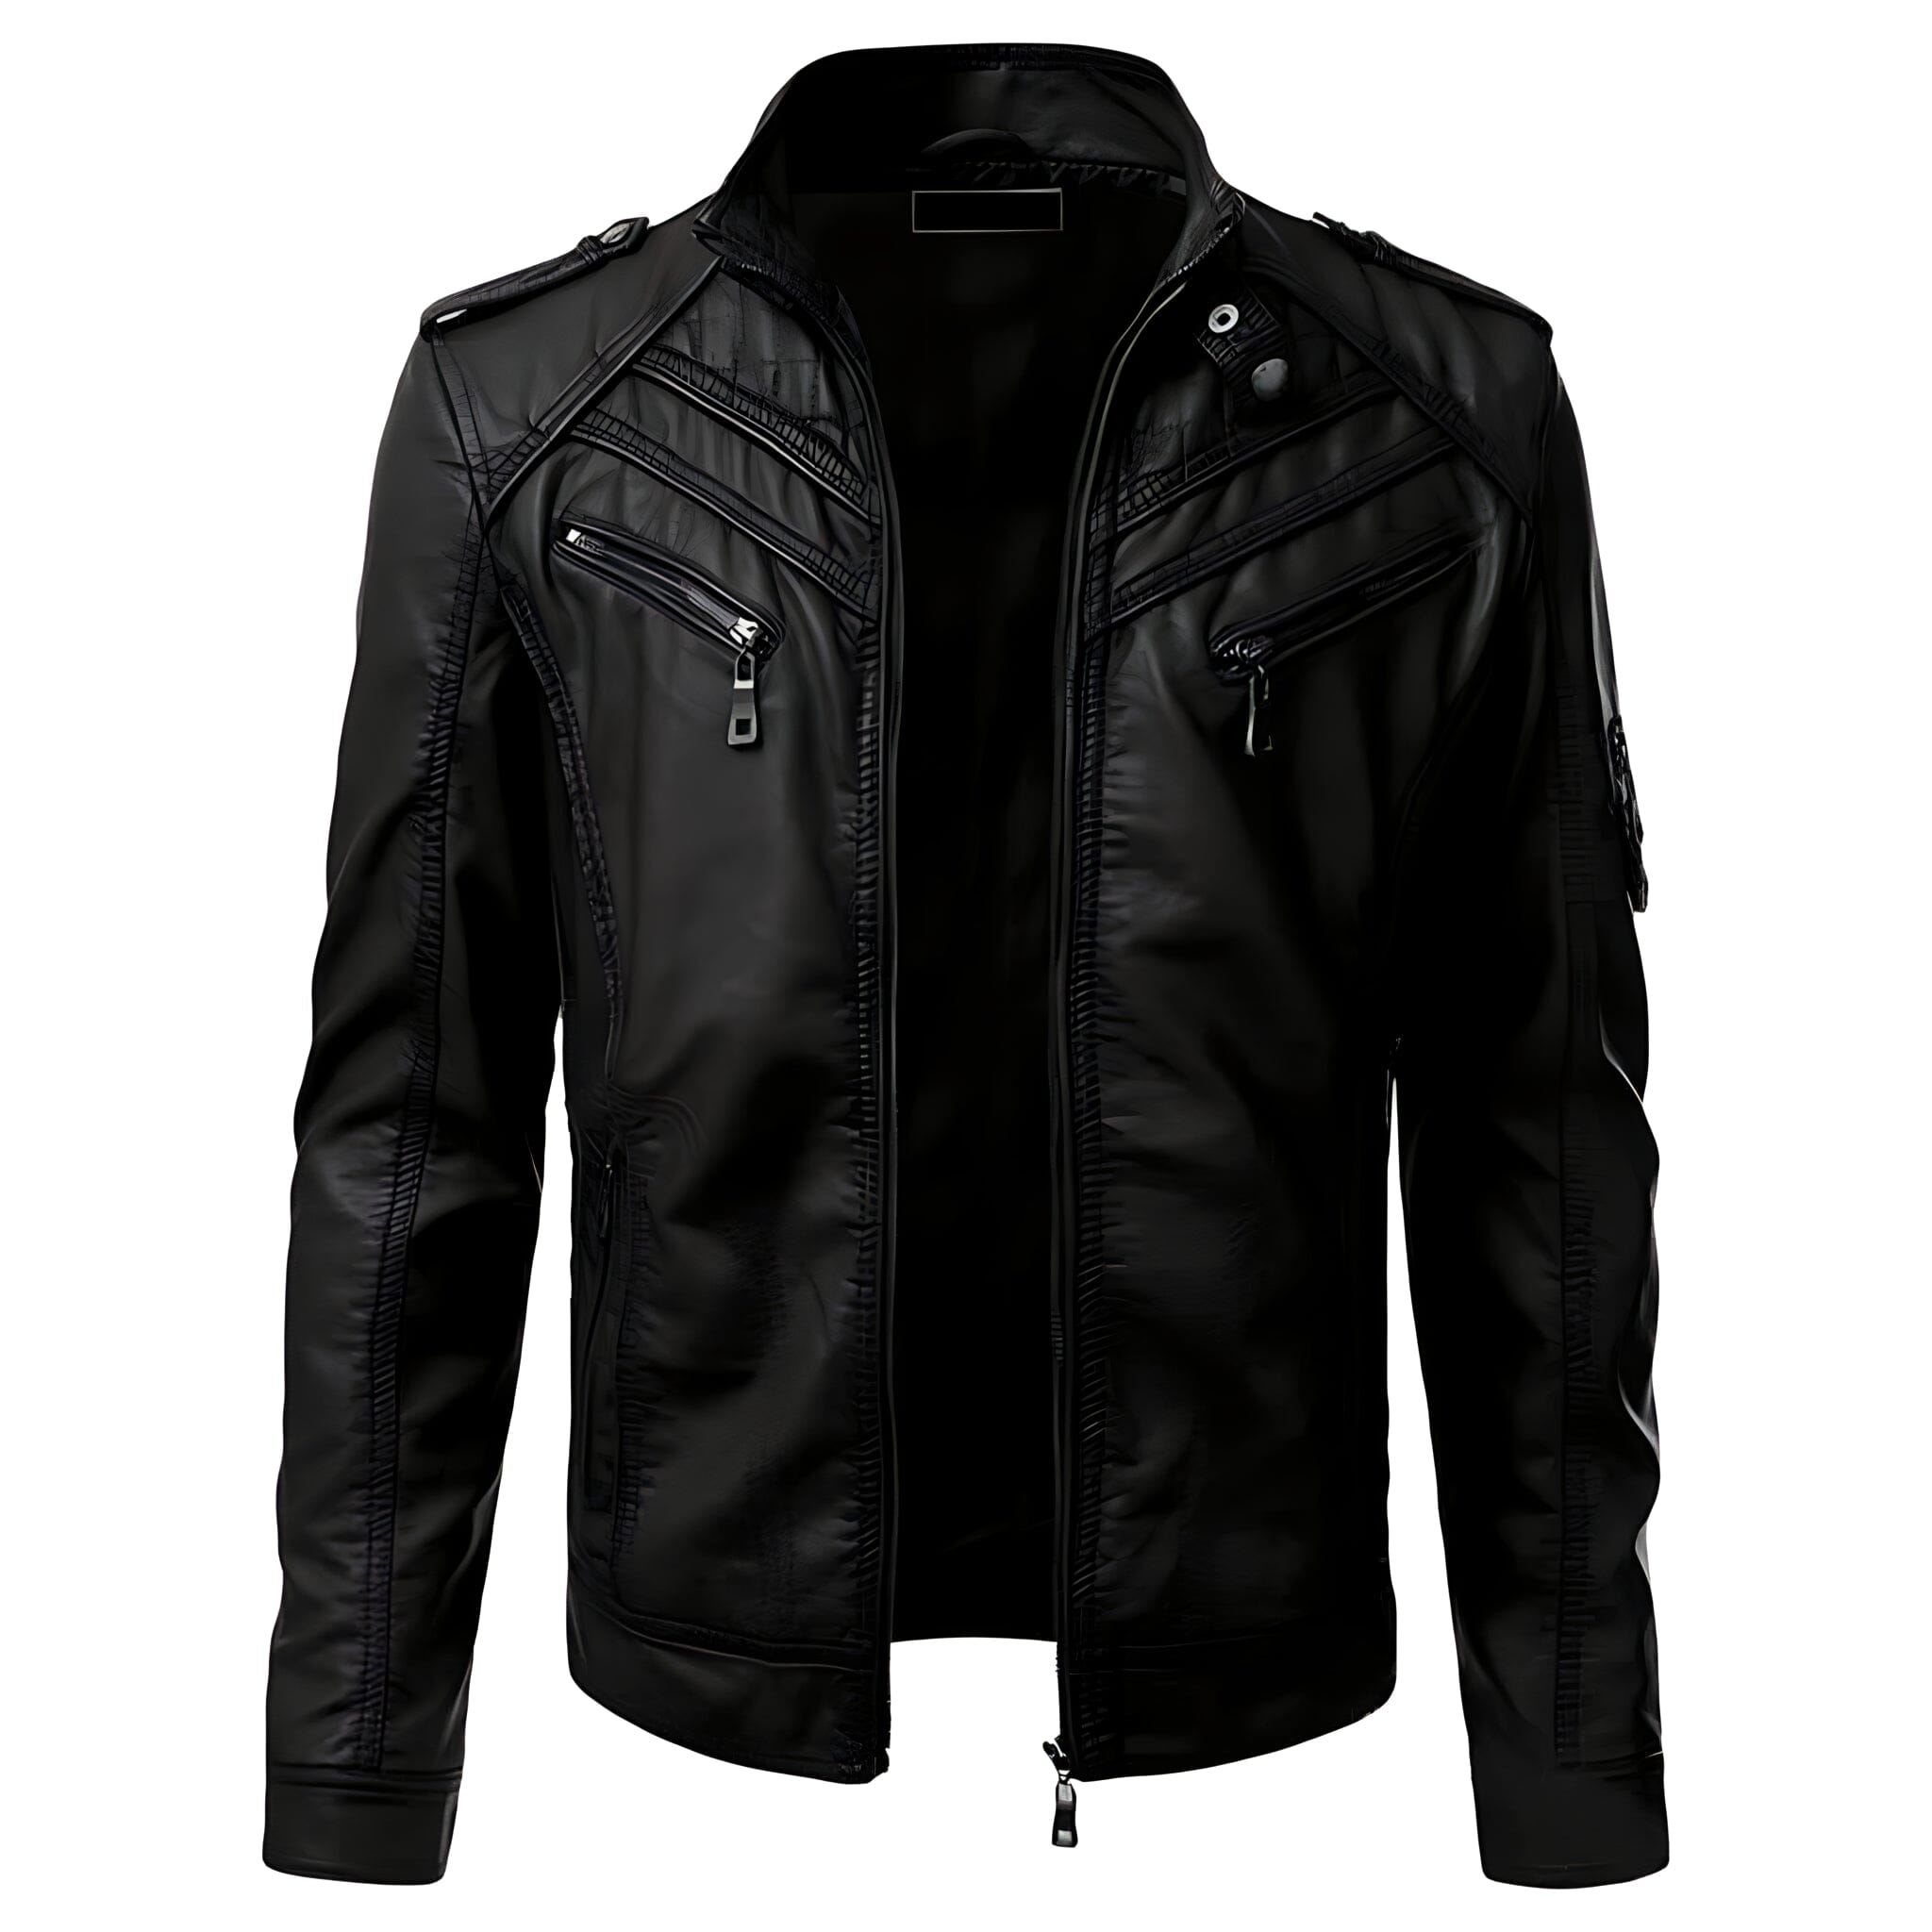 The Zephyr Faux Leather Biker Jacket